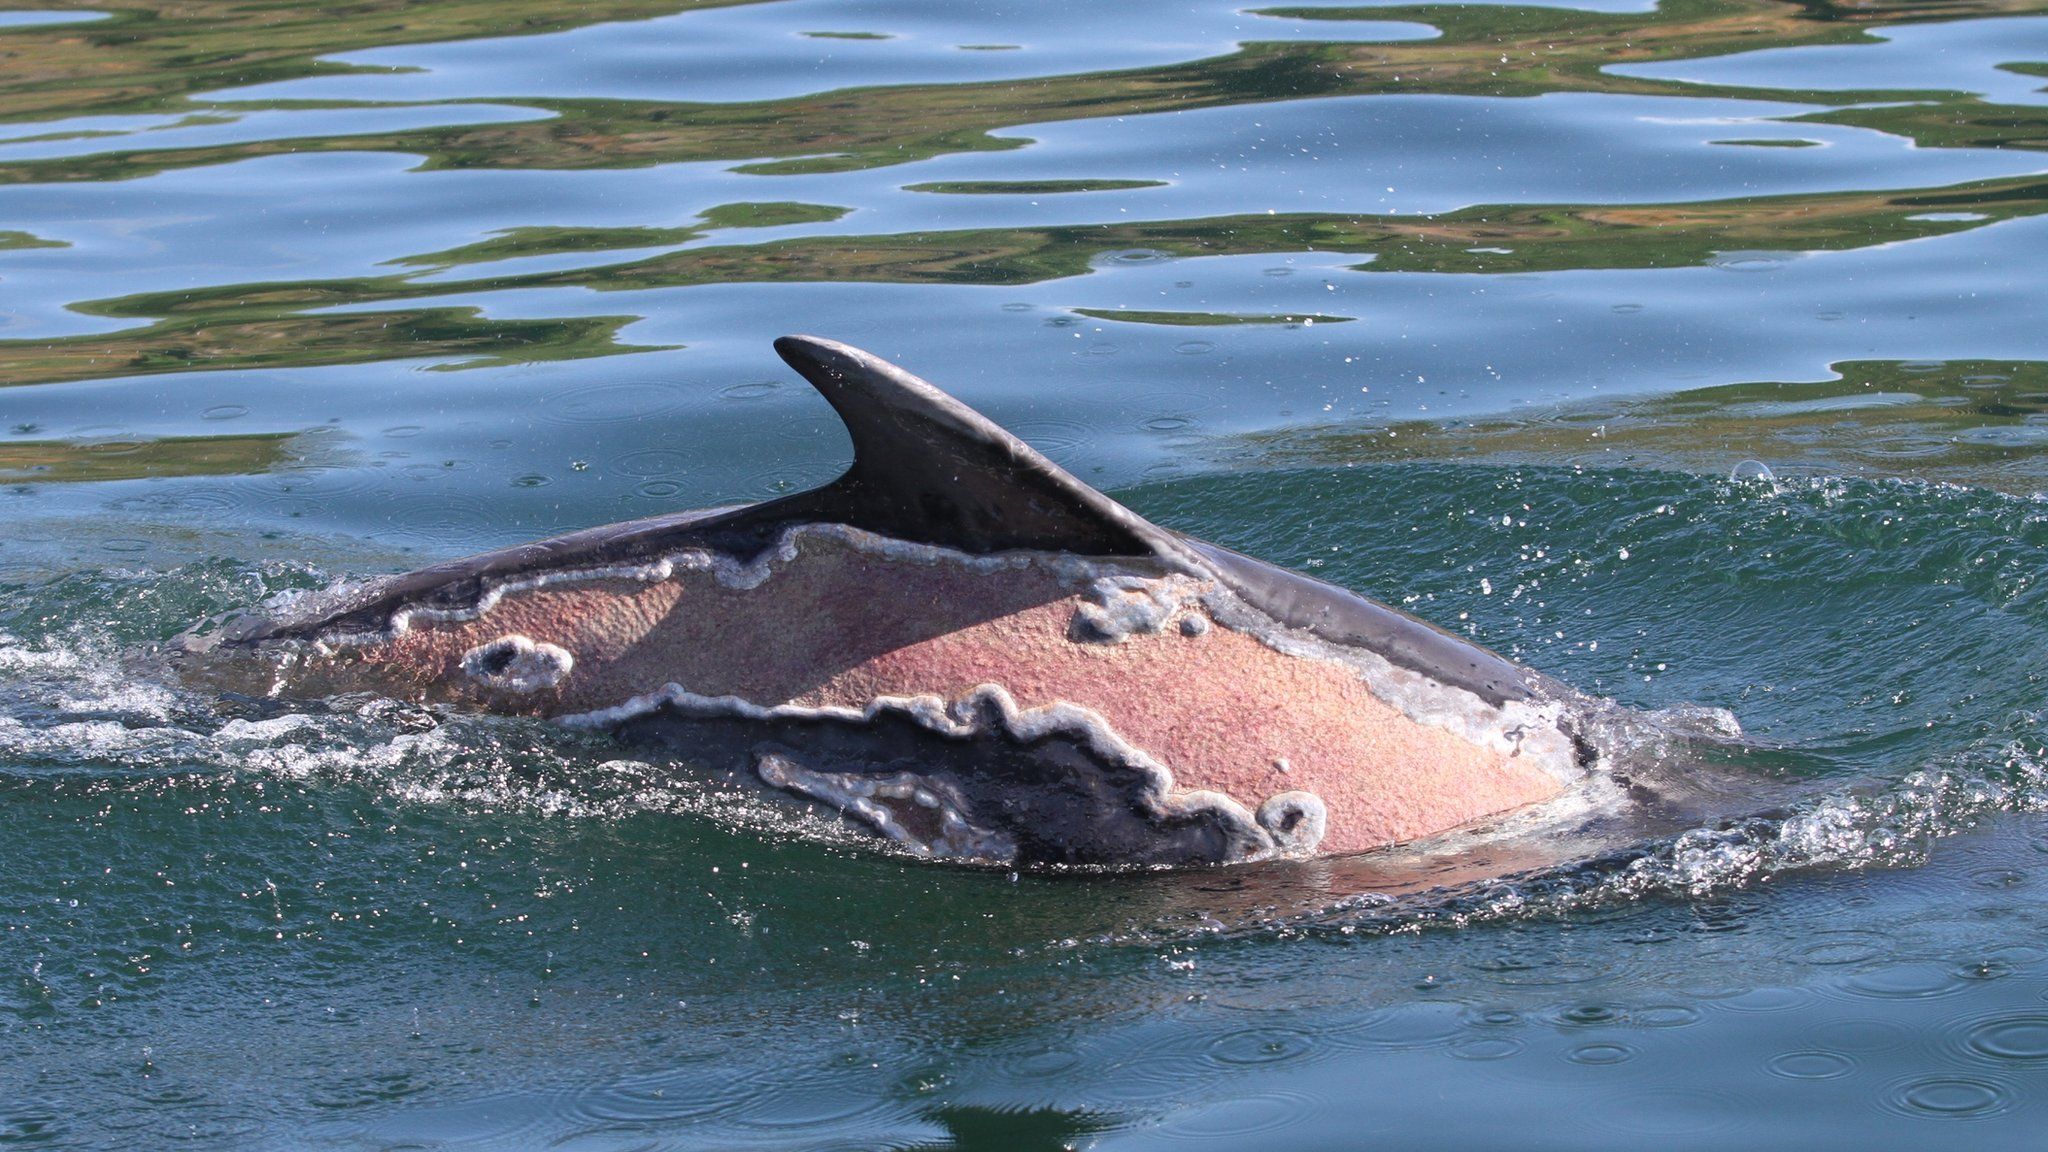 Sunburned dolphin Spirtle